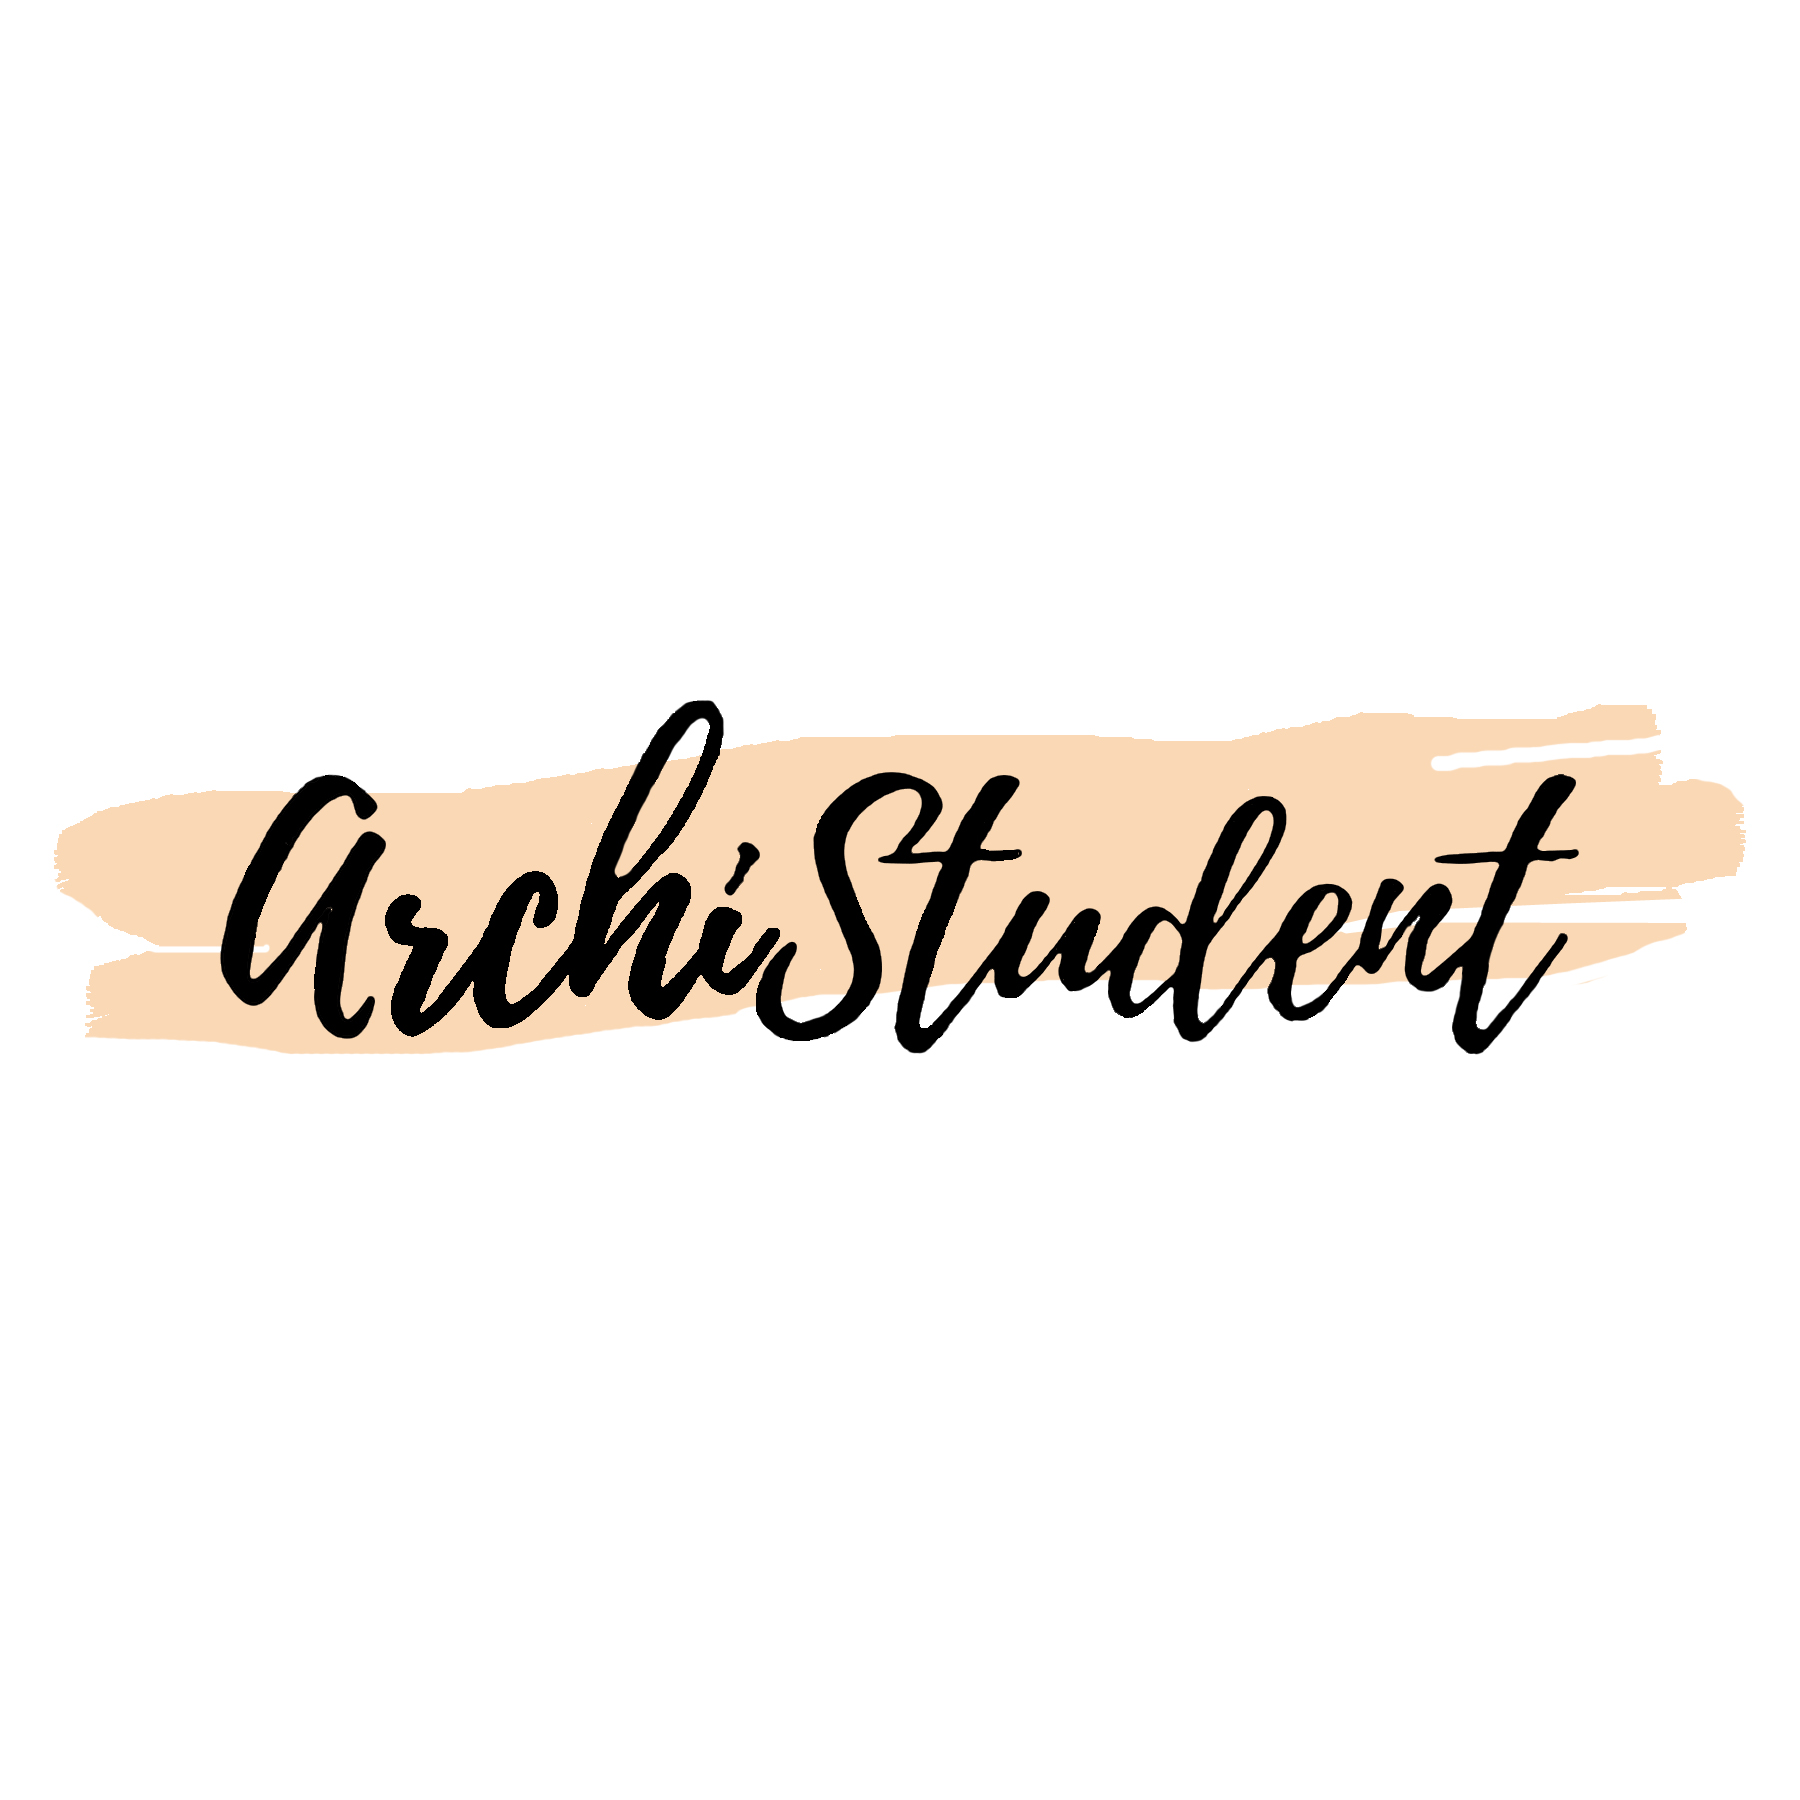 Archistudent Logo